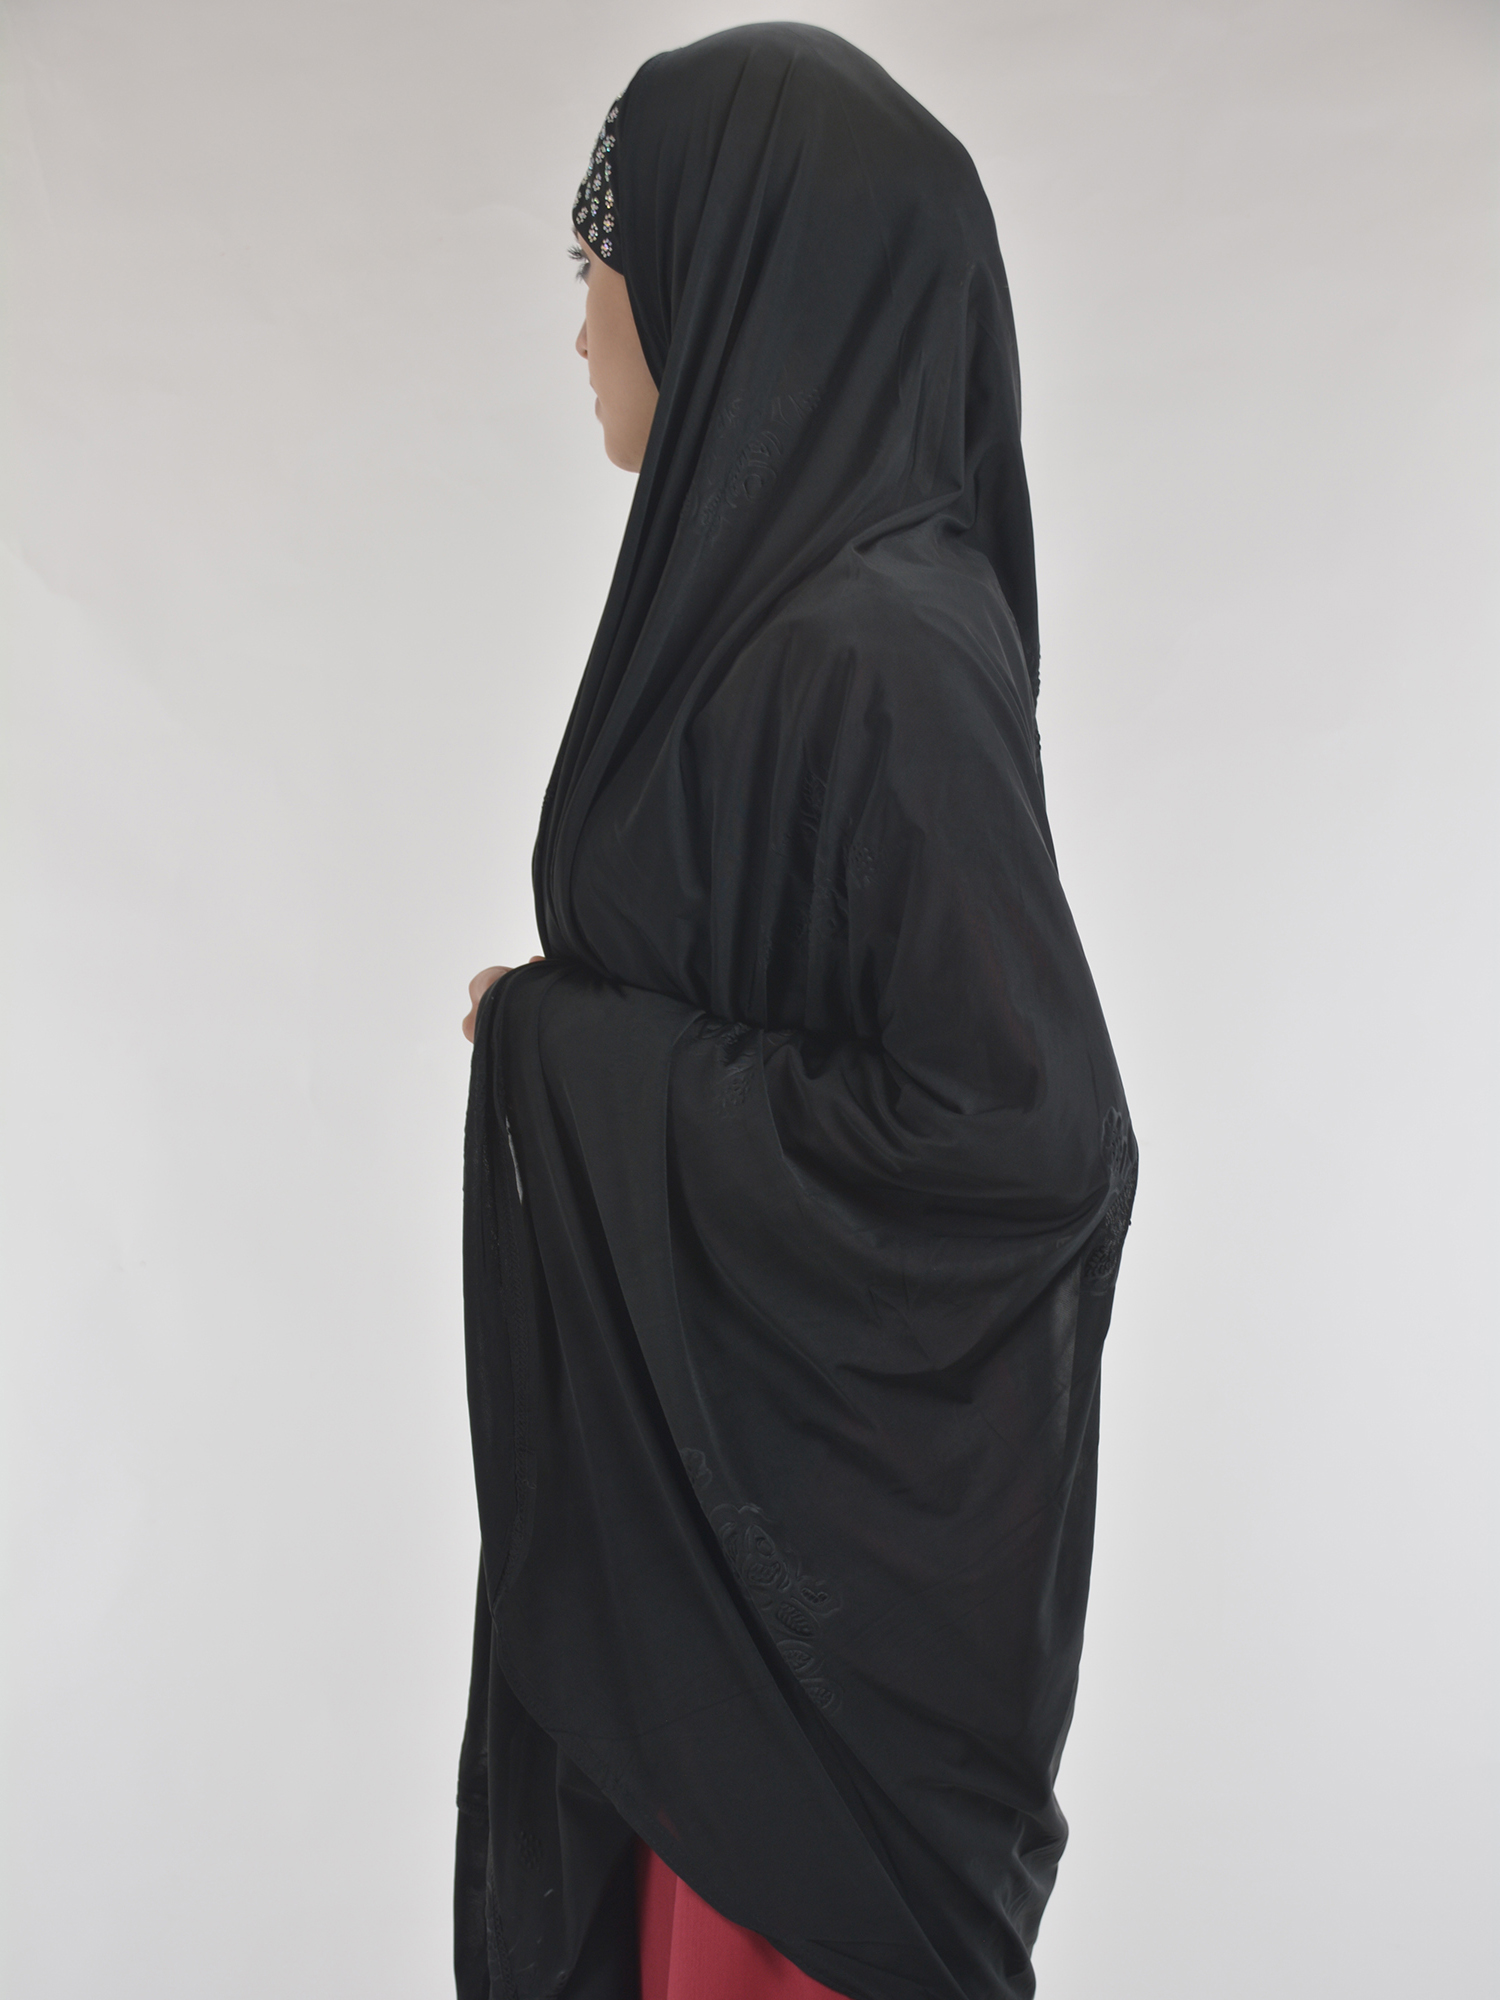 Black - Droplet Khimar Hijab Pin Pack (Pack of 6 Pins)